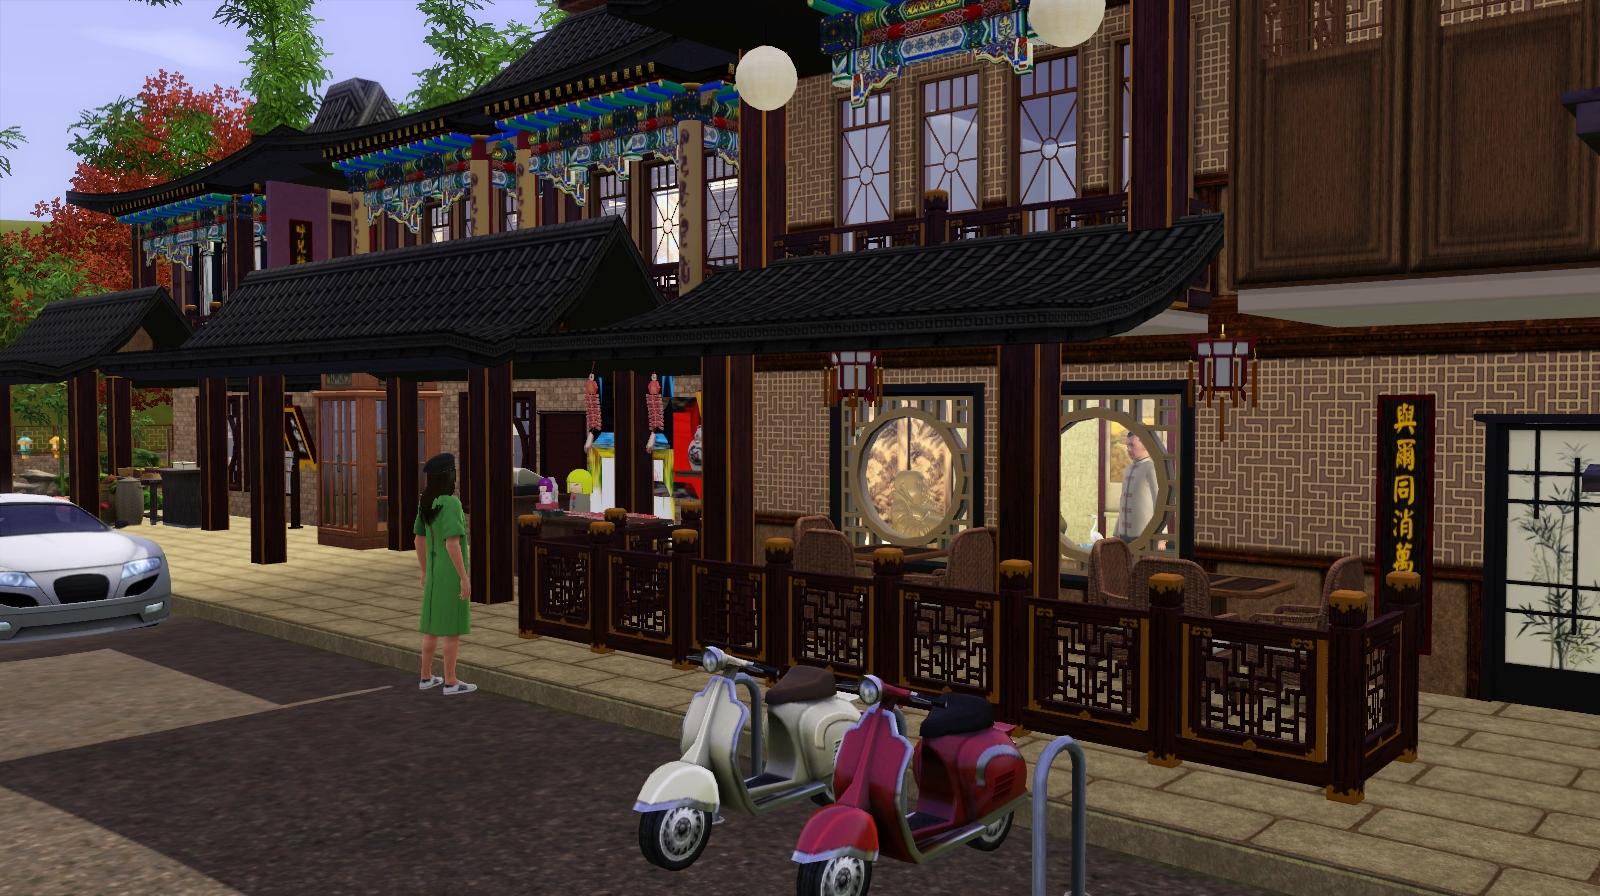 sims - The Sims 3.Общественные участки - Страница 2 Screenshot-9